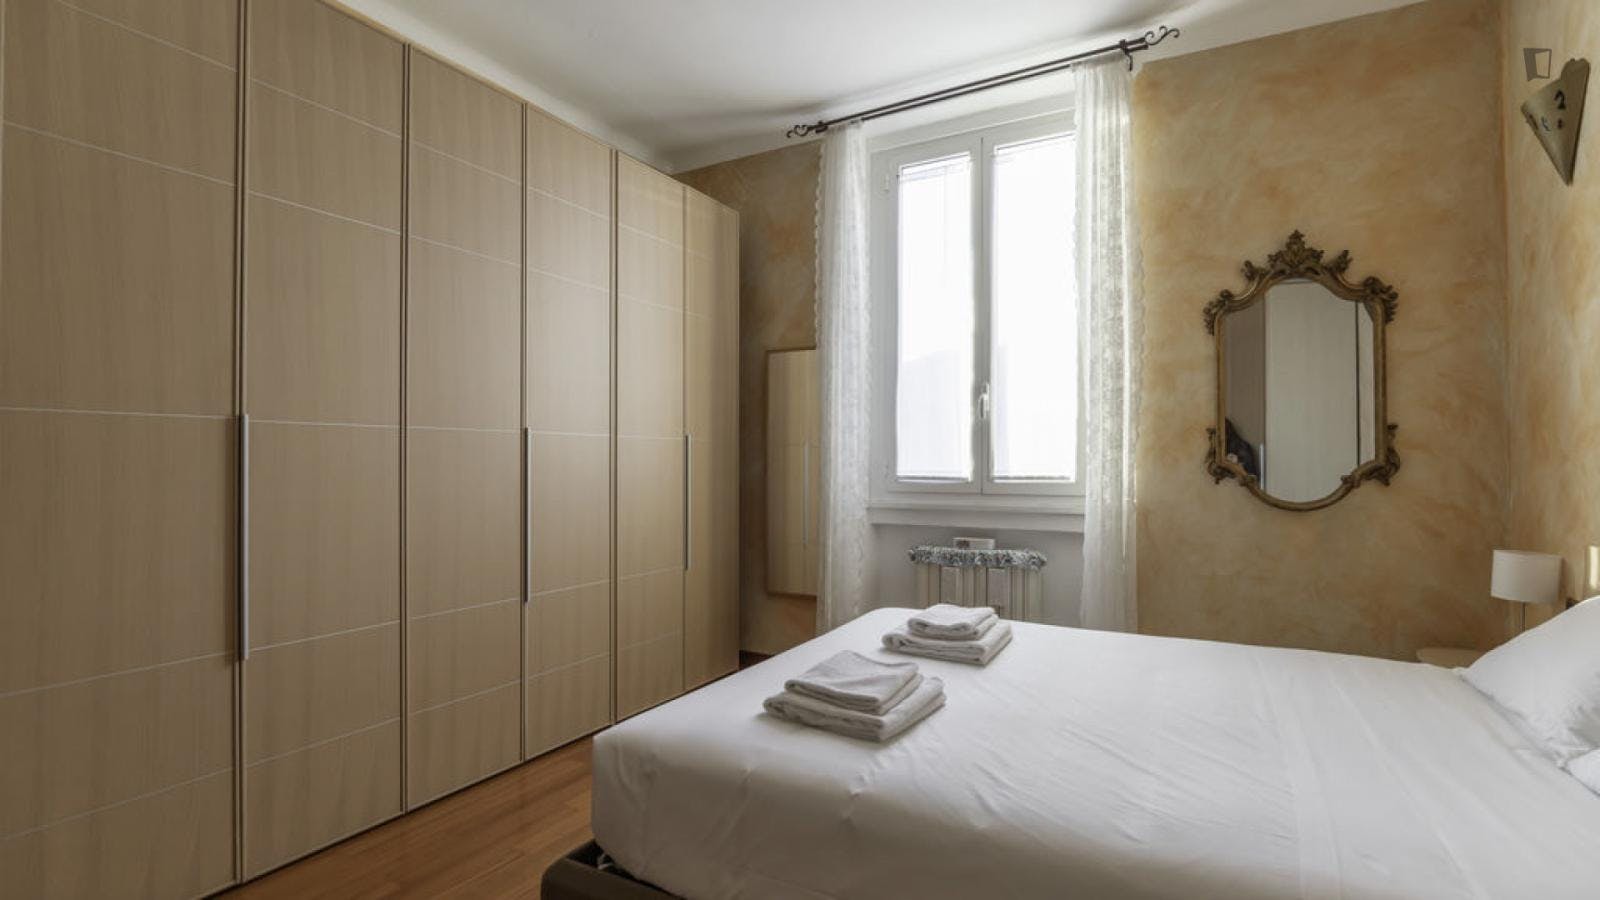 Homely 1-bedroom apartment in Cederna